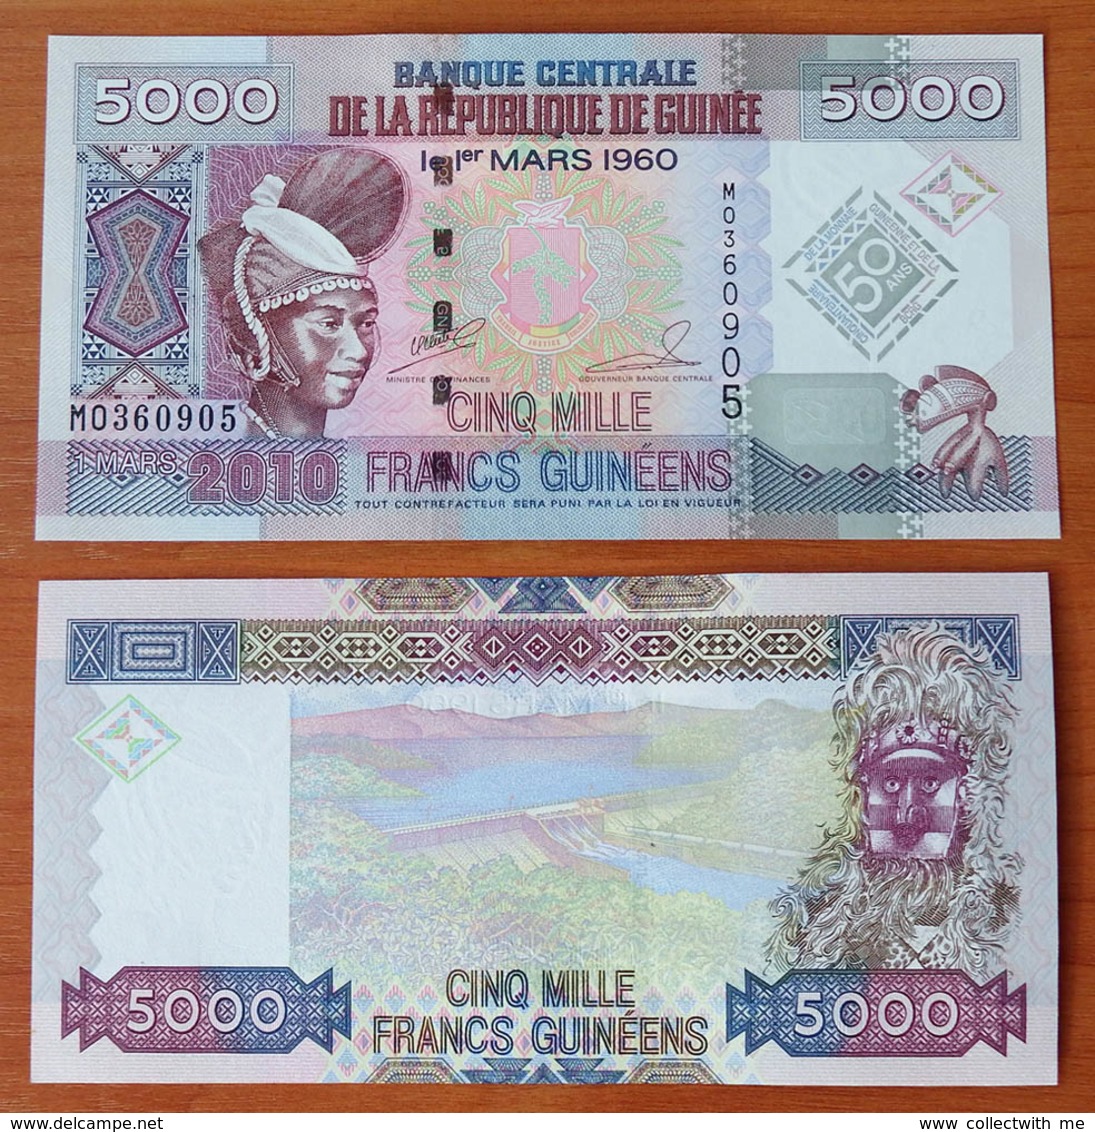 Guinea 5000 Francs 2010 Commemorative UNC - Guinea